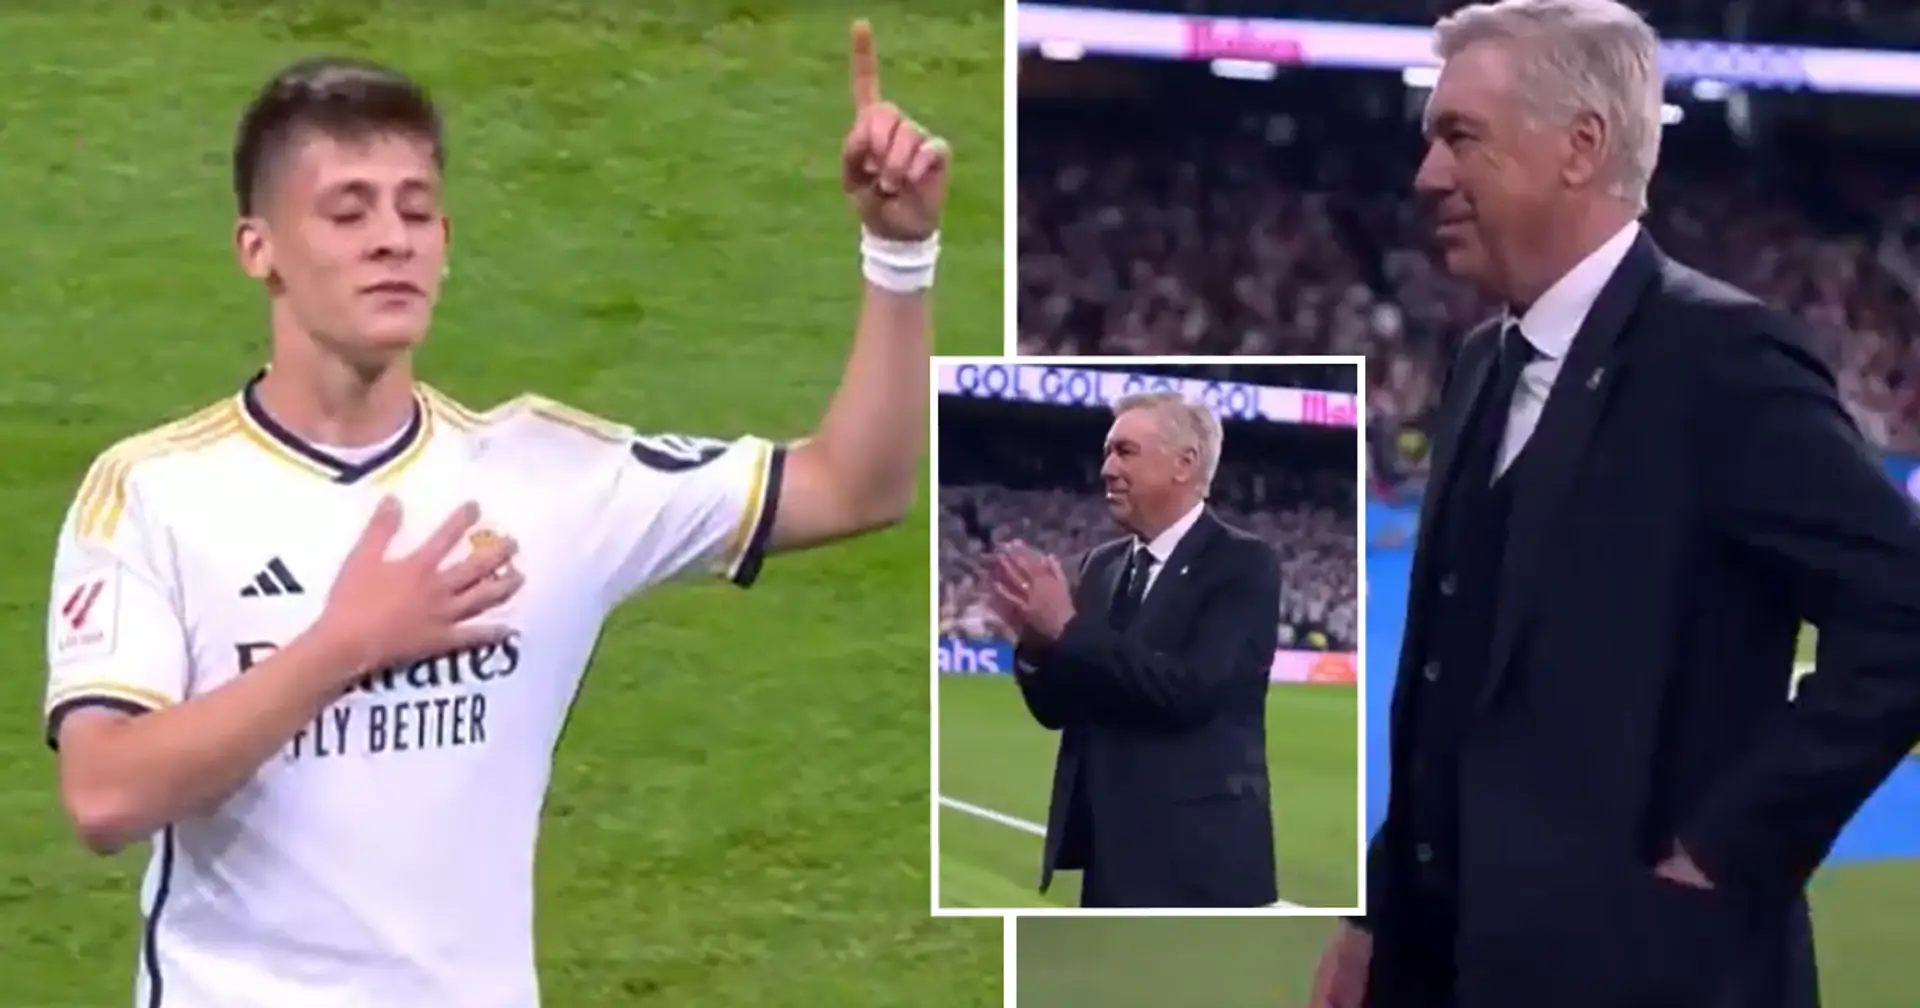 "Mamma mia": ce que signifie la réaction de Carlo Ancelotti lors du dernier but d'Arda Guler au Real Madrid